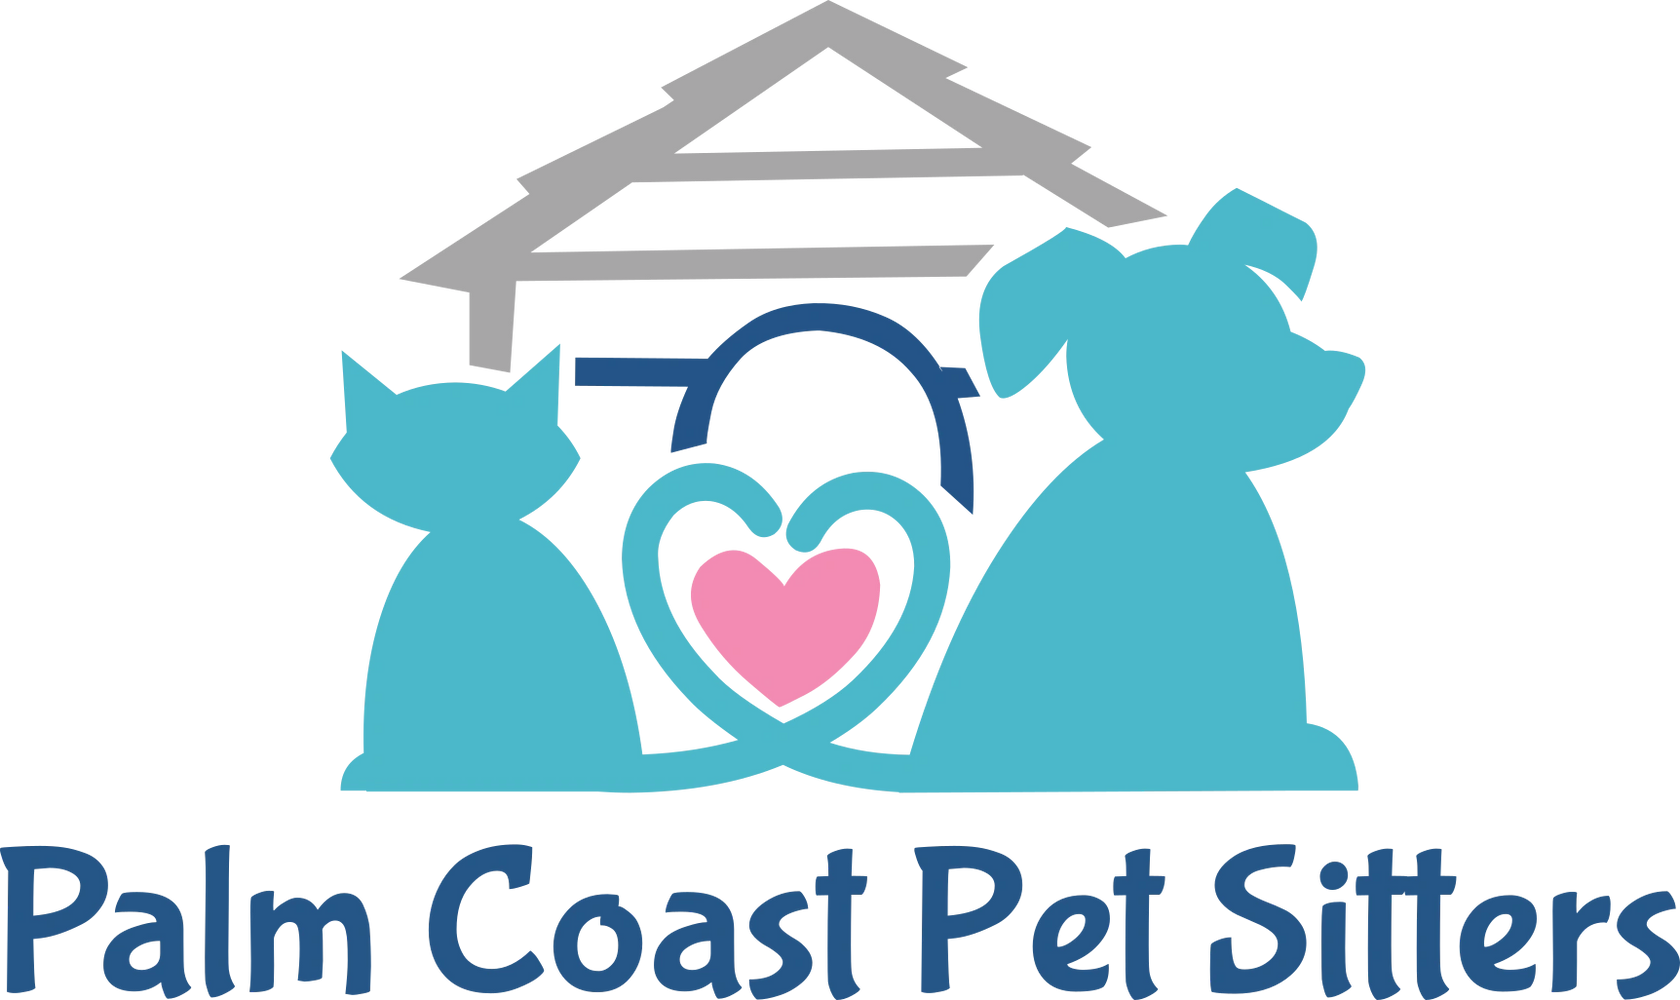 Palm Coast Pet Sitters - Pet Sitting - Palm Coast, Florida